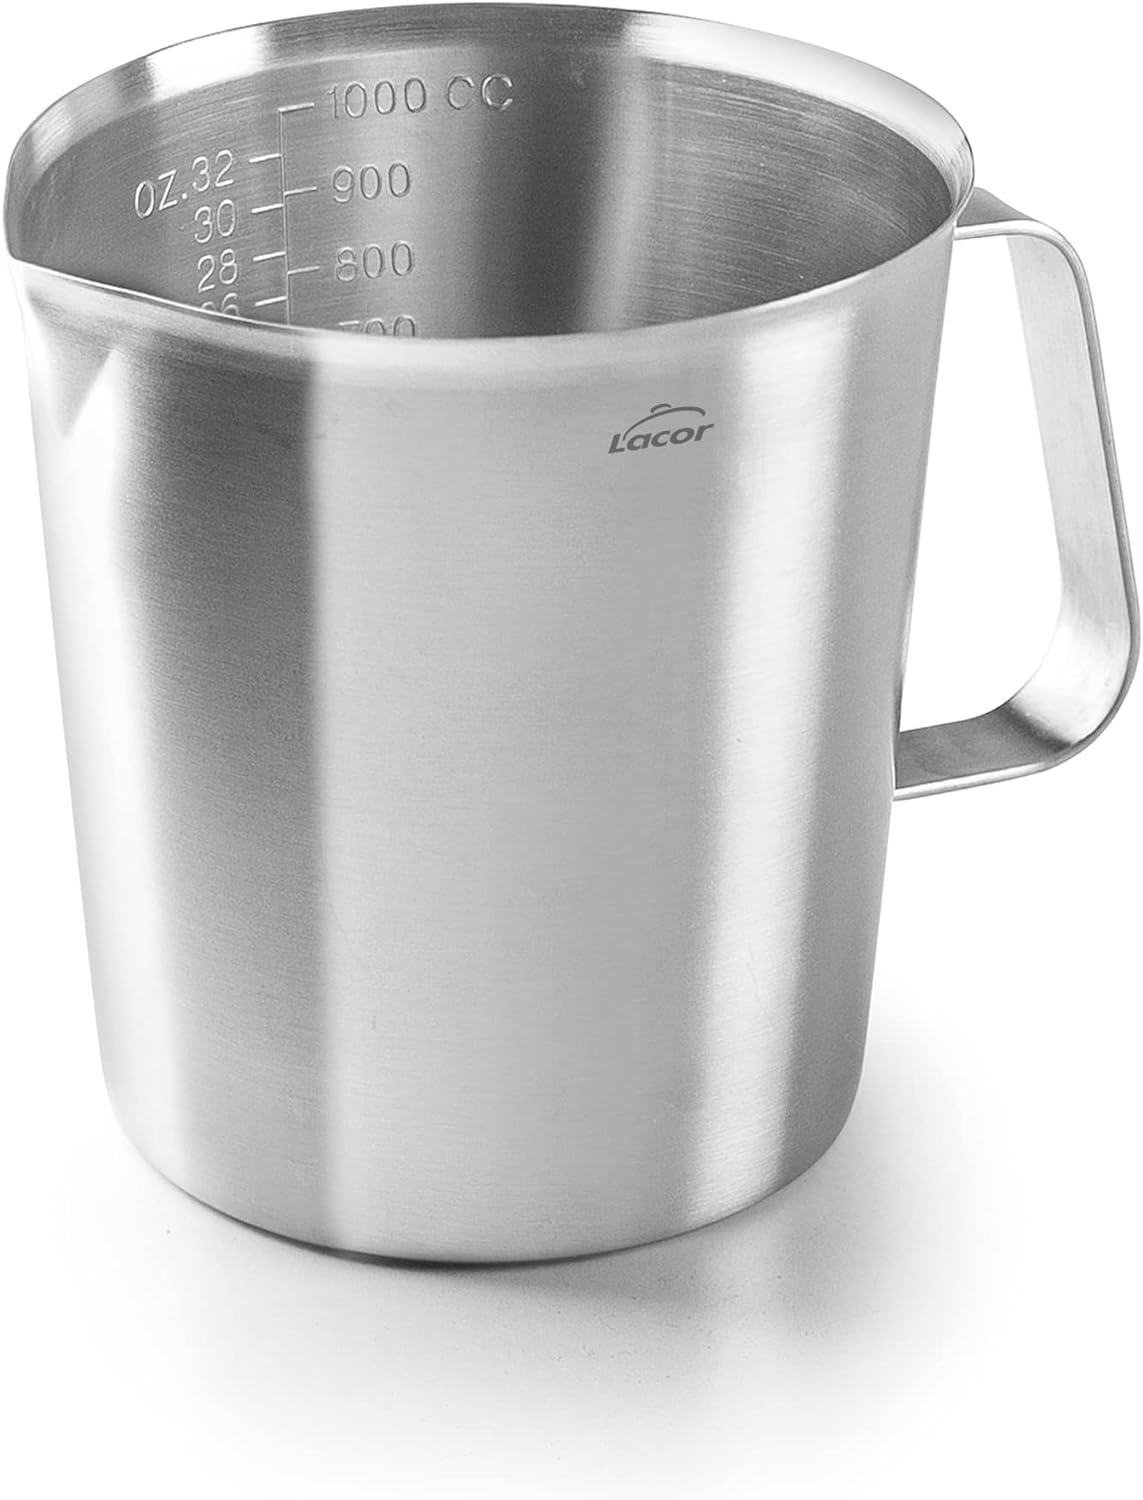 Stainless steel measuring jug Lacor 62741